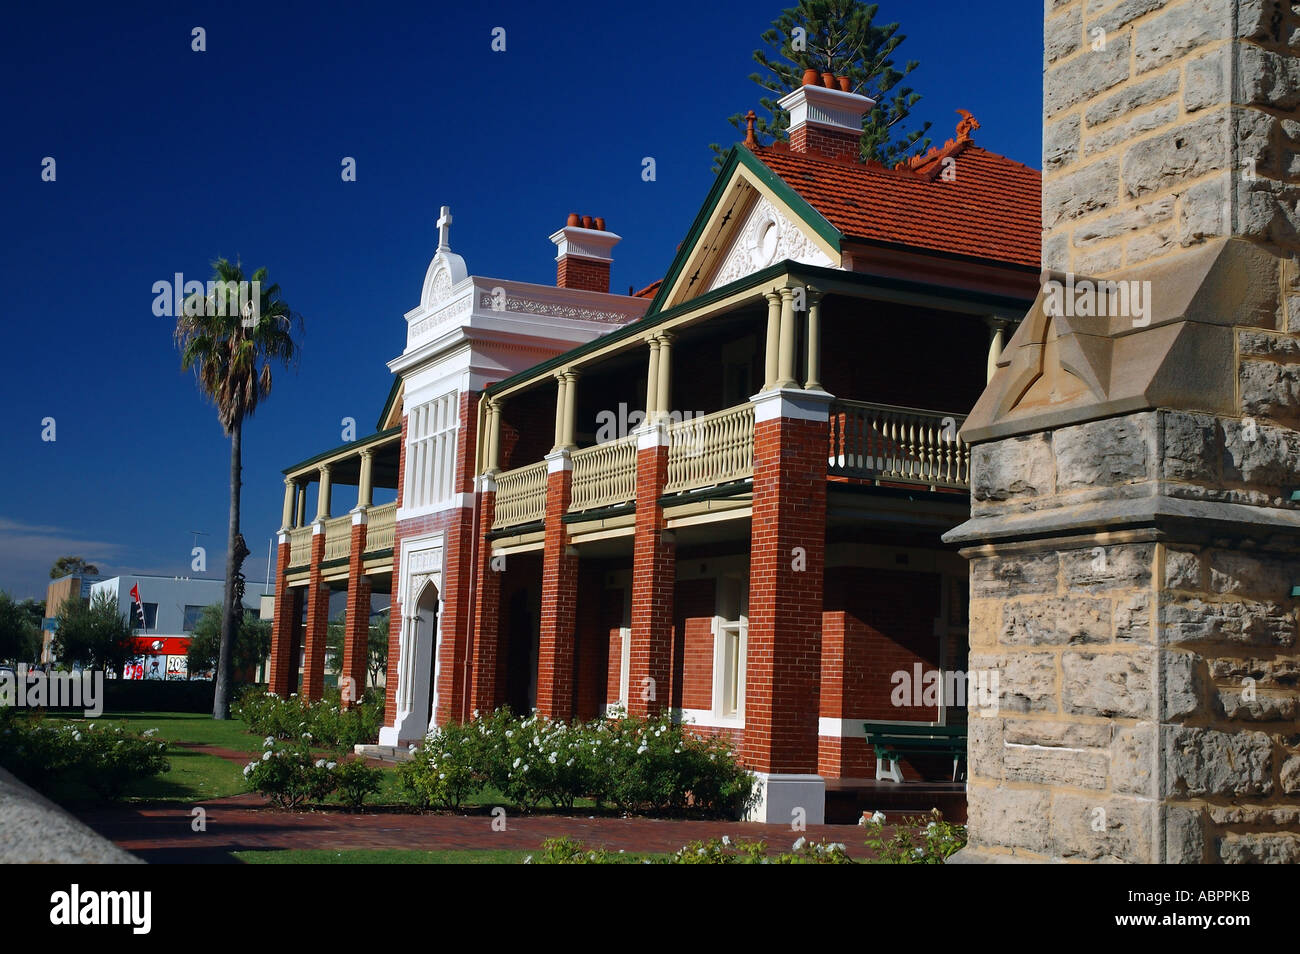 Convent and presbytery of the historic Basilica of St Patrick Fremantle Perth Western Australia No PR Stock Photo